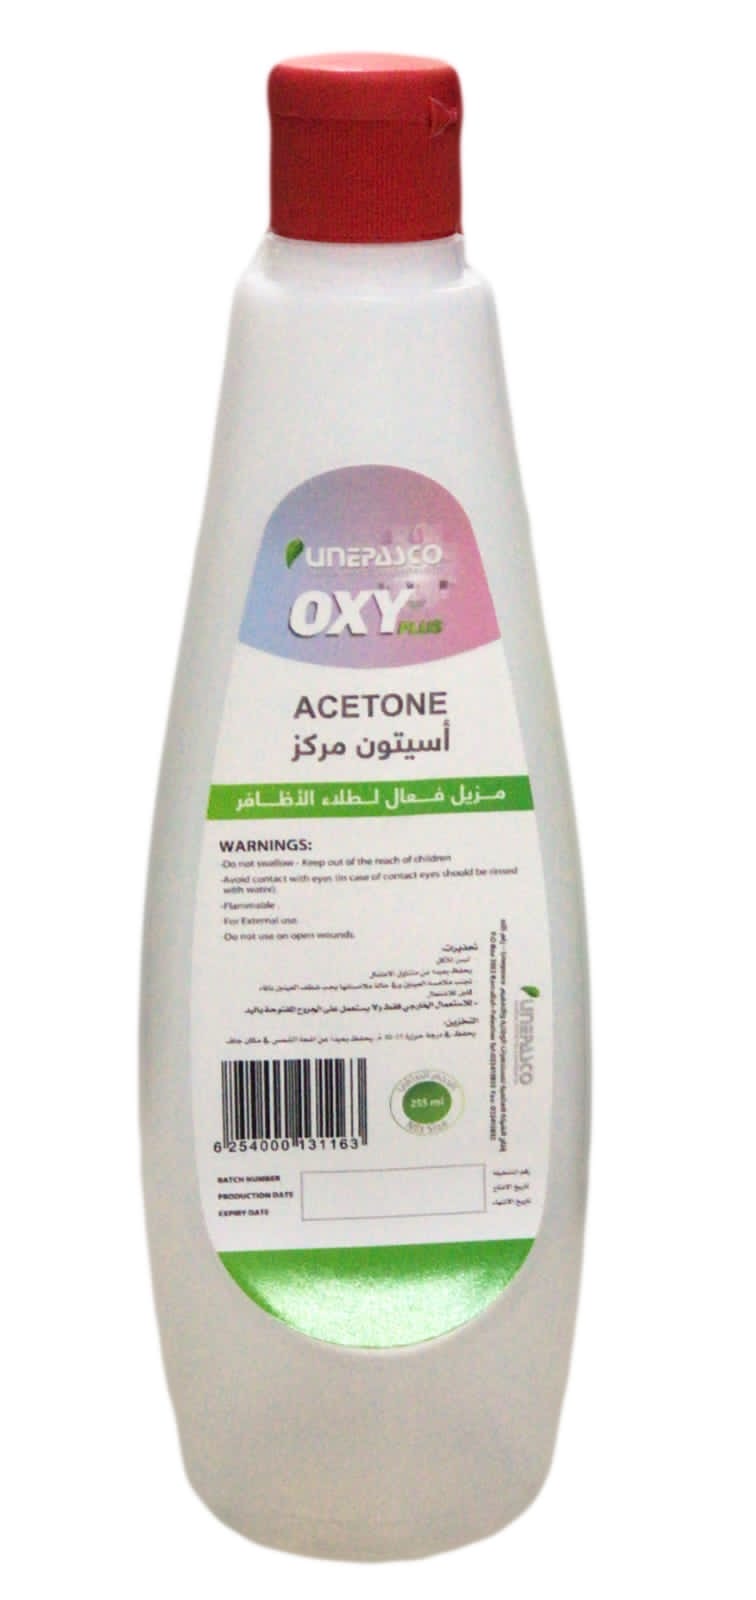 OxyPlus Acetone Nail Polish Remover